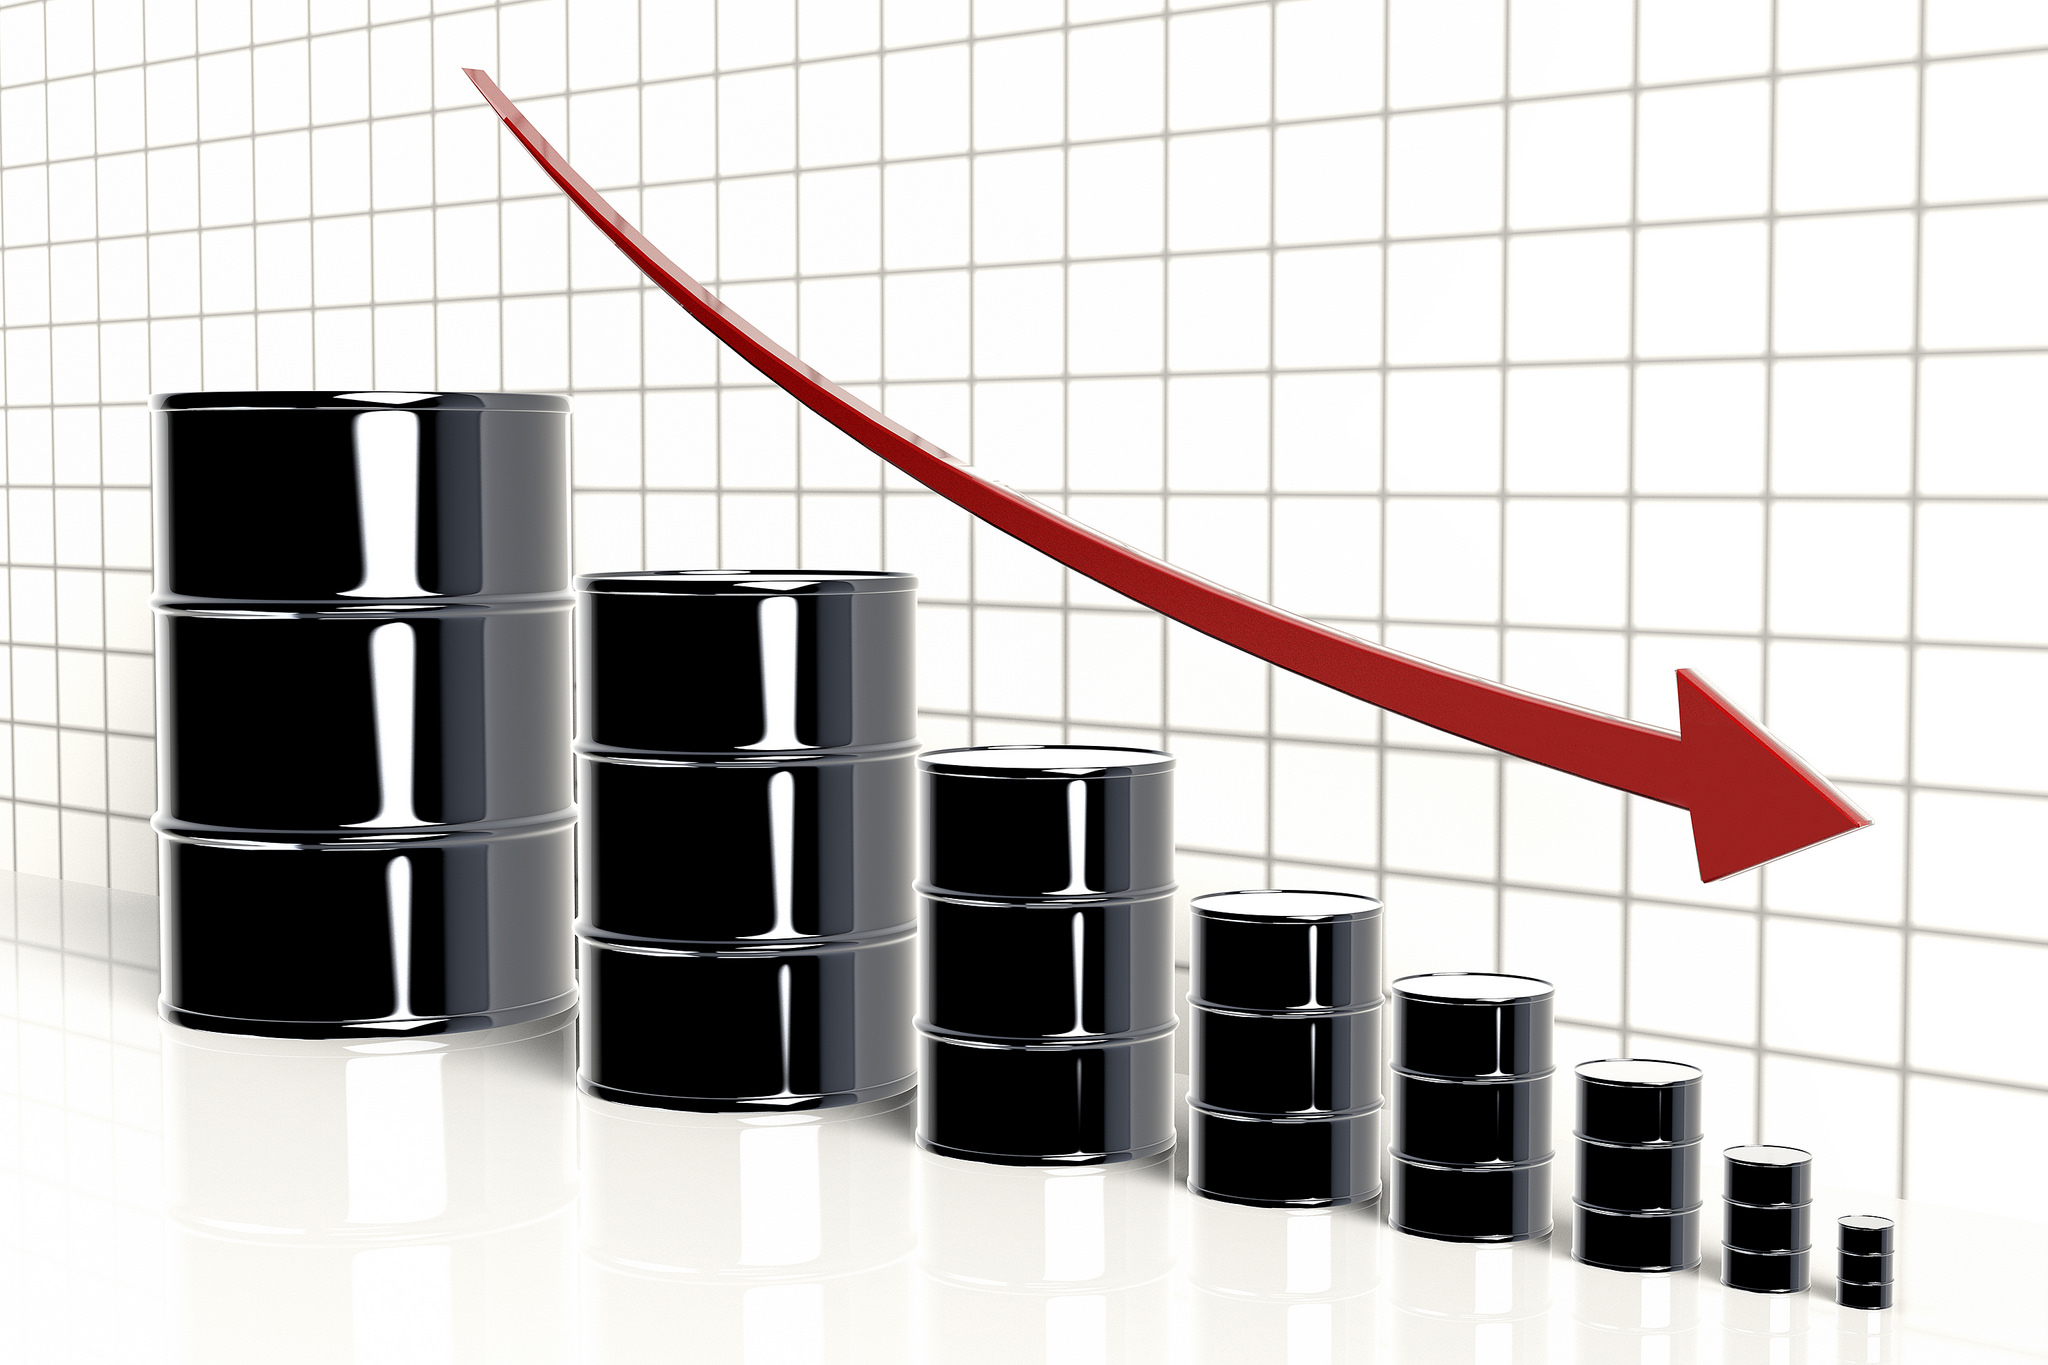 Увеличение цен на нефть